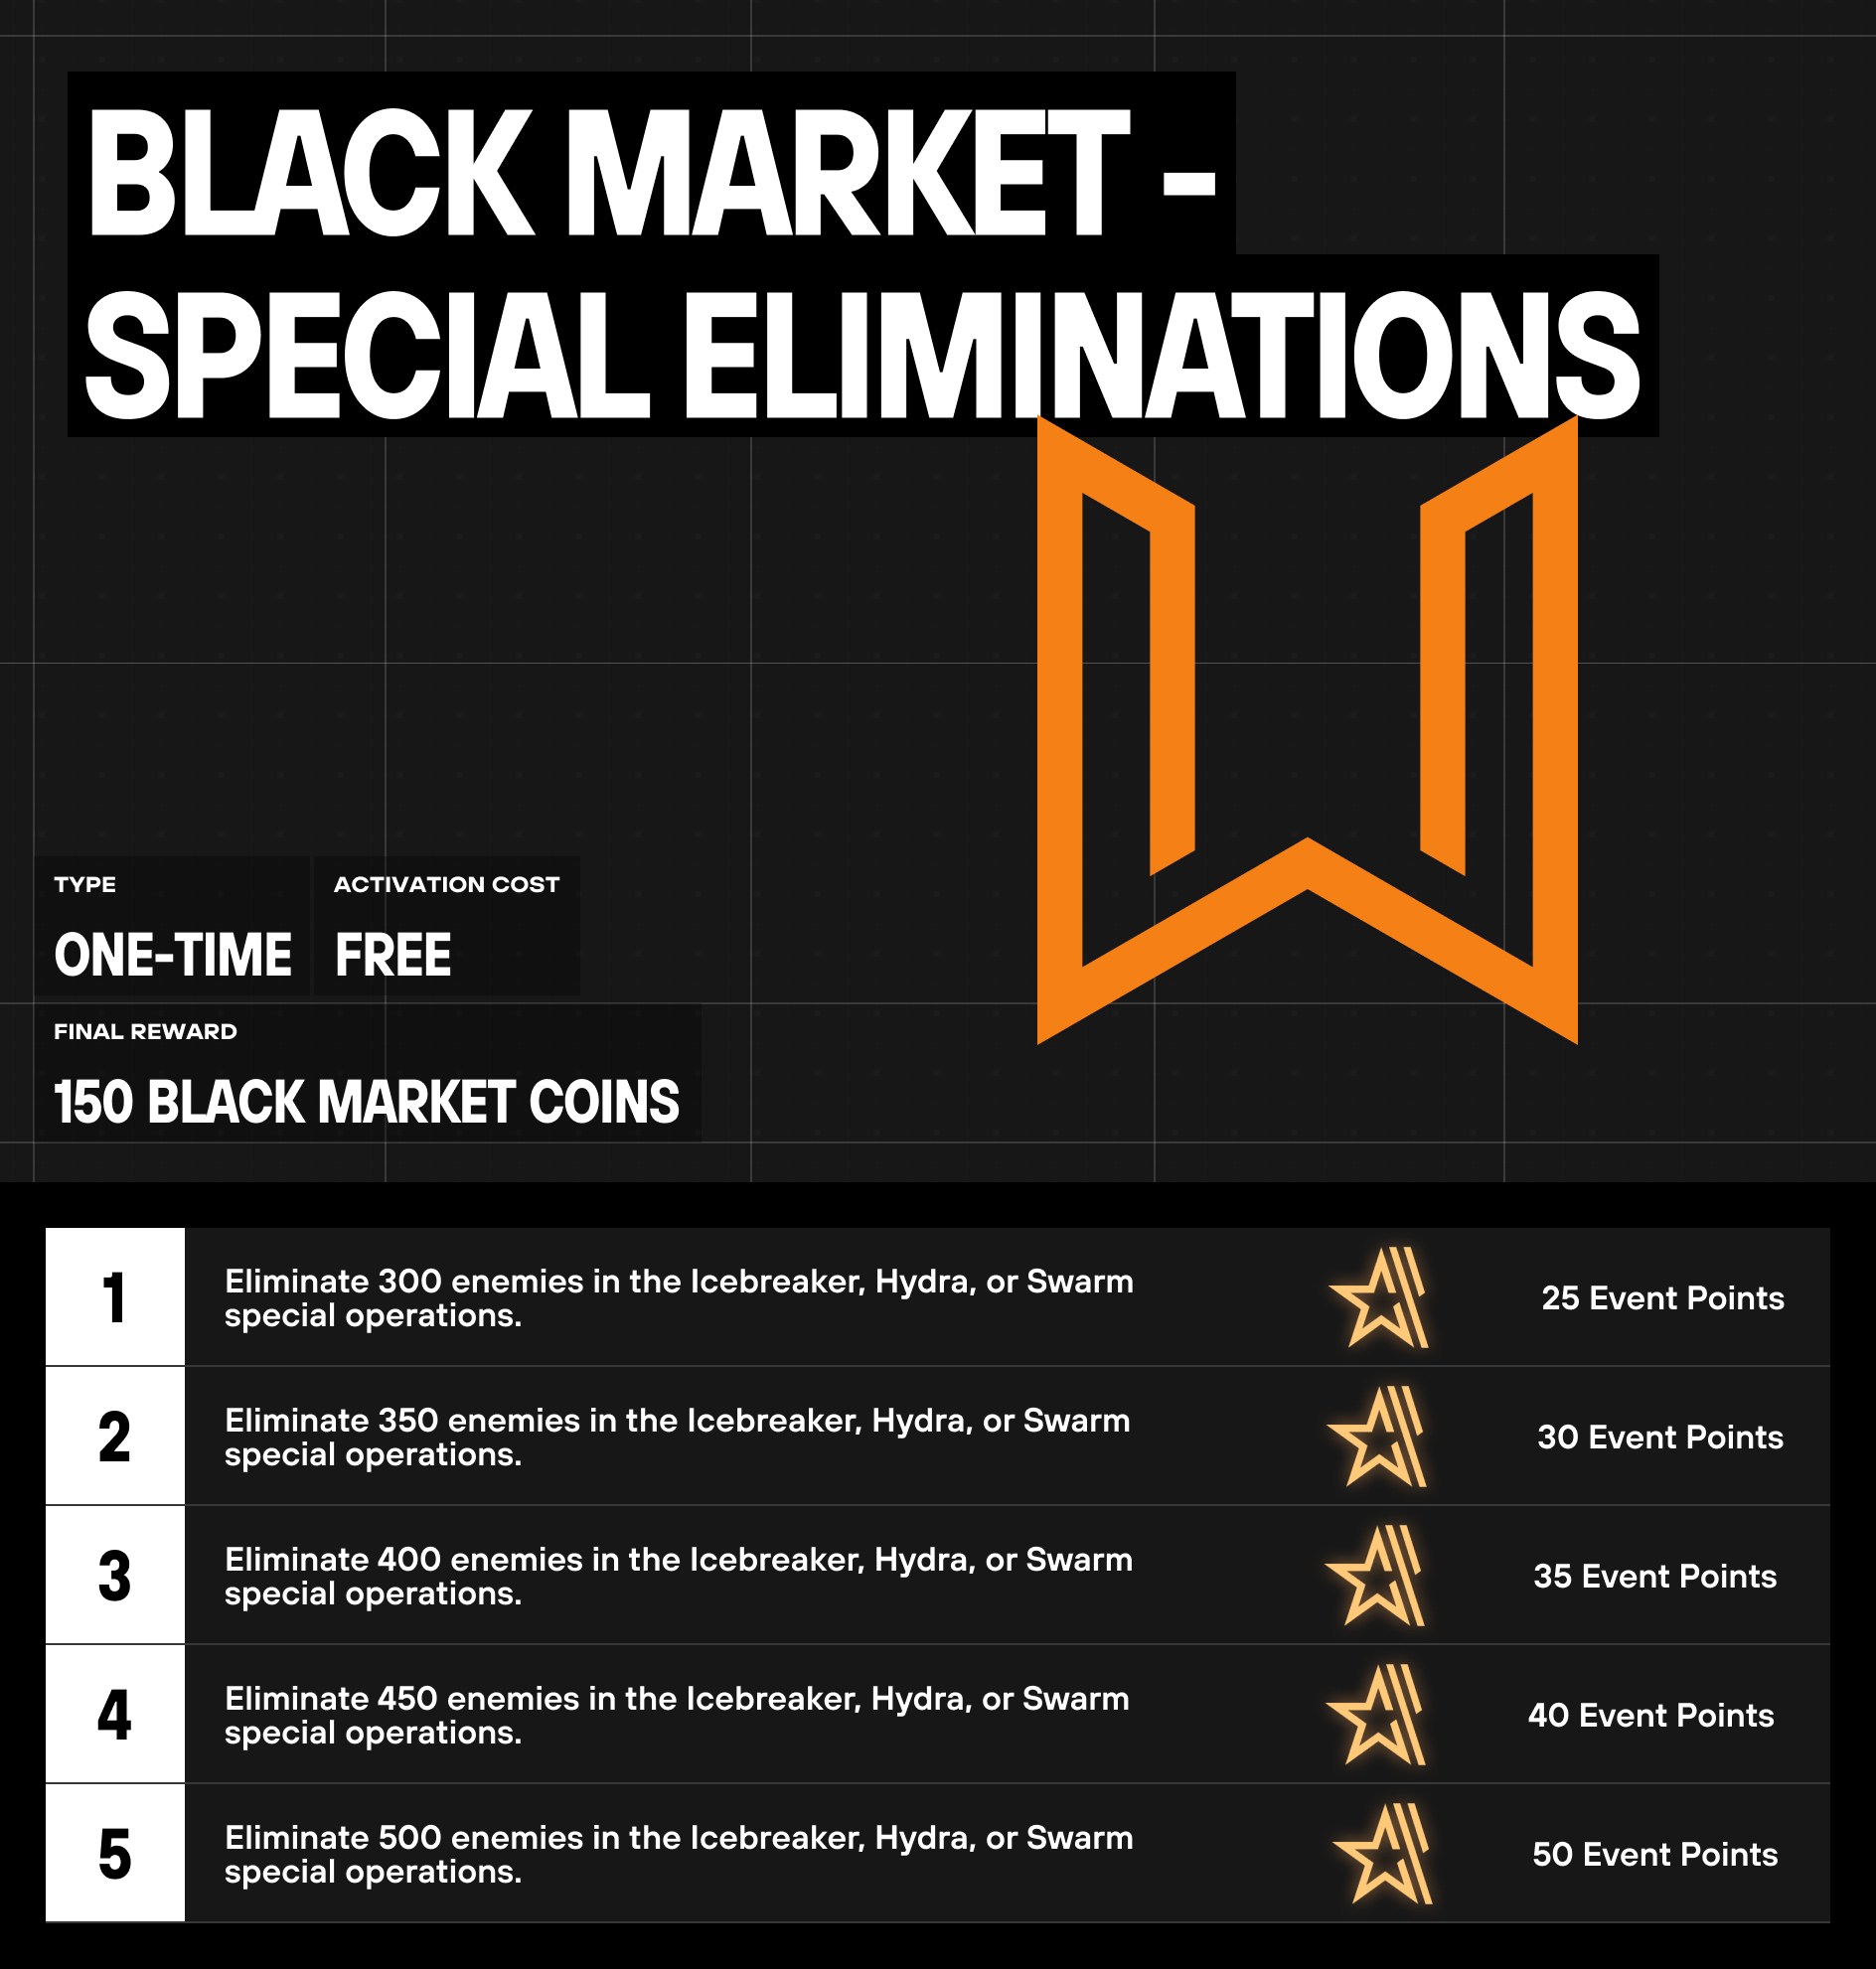 Black Market - Special Eliminations